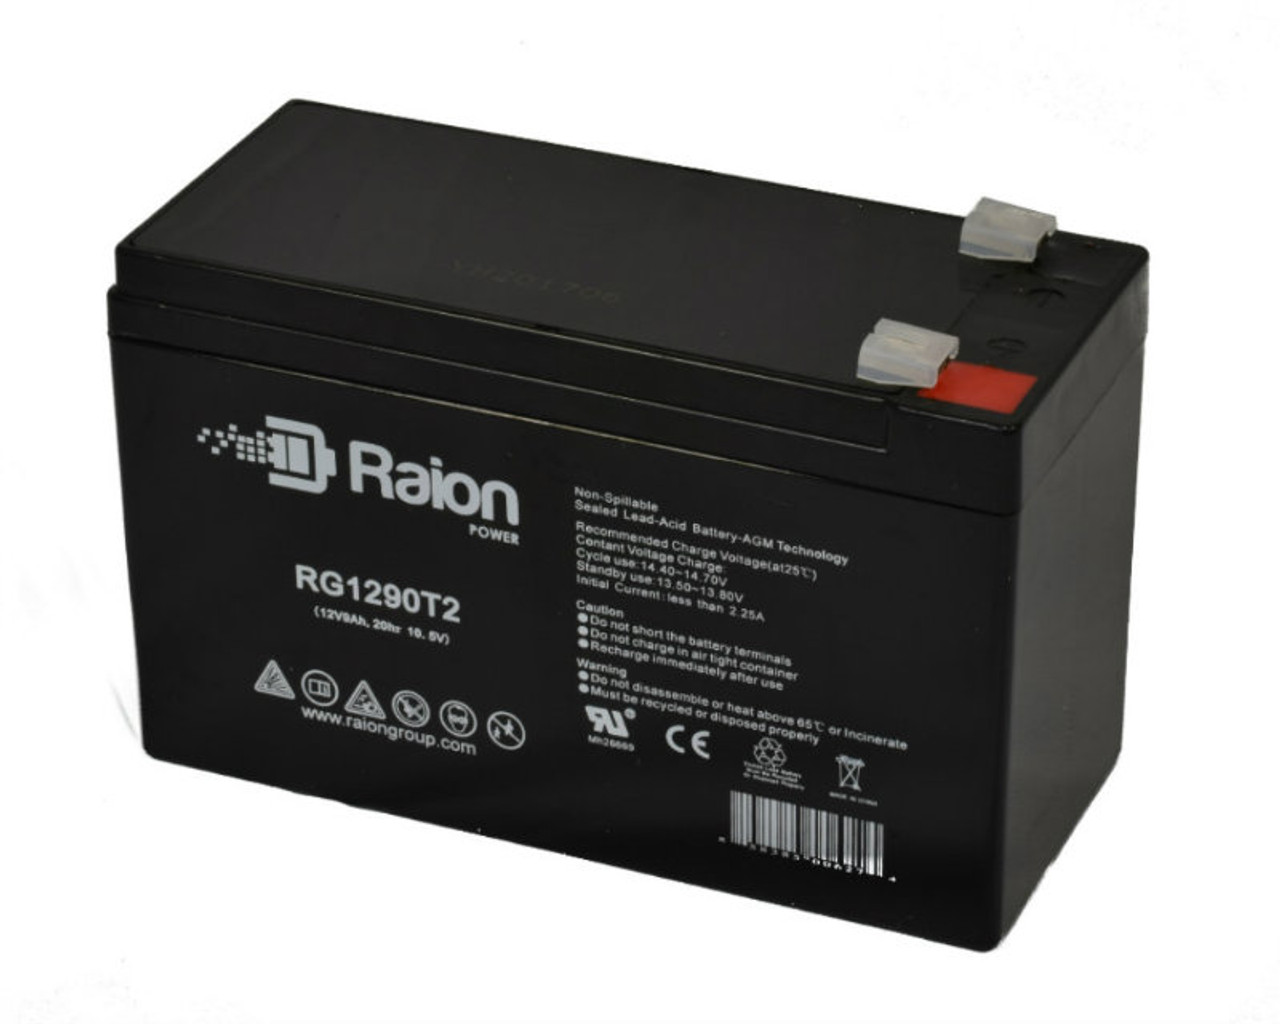 Raion Power RG1290T2 12V 9Ah AGM Battery for PBQ C 9-12